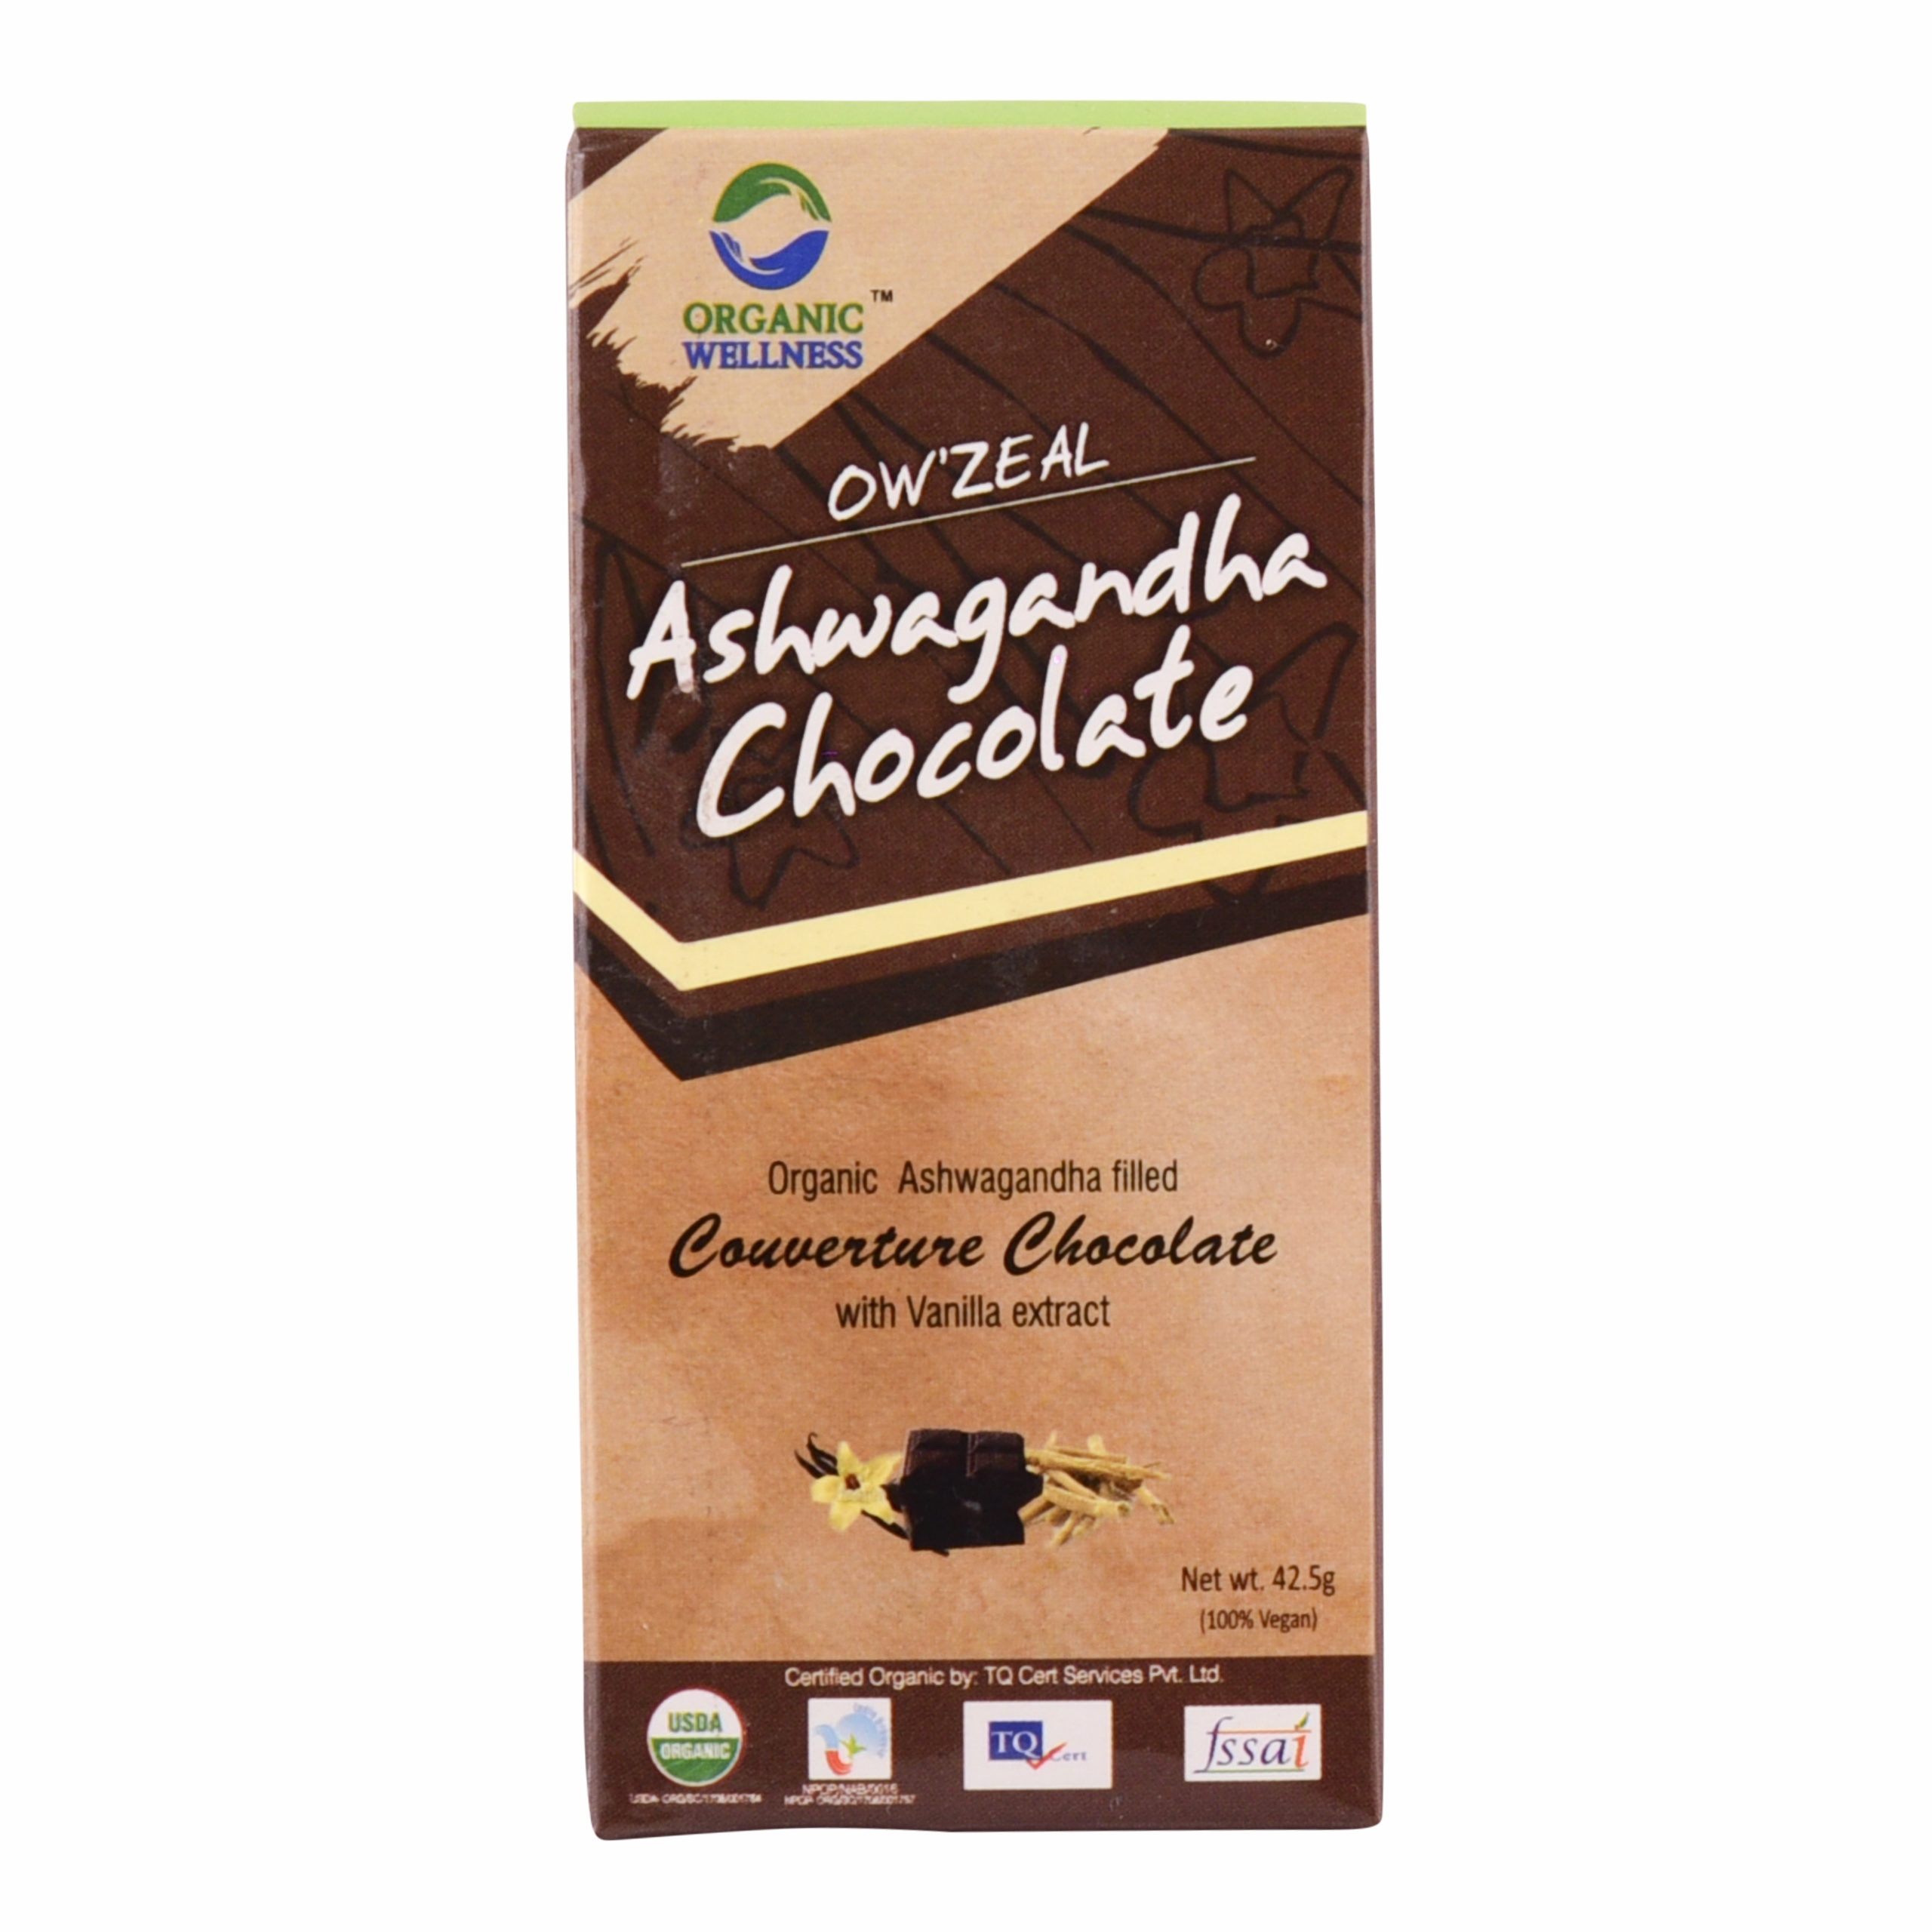 Organic wellness Ashwagandha Chocolate